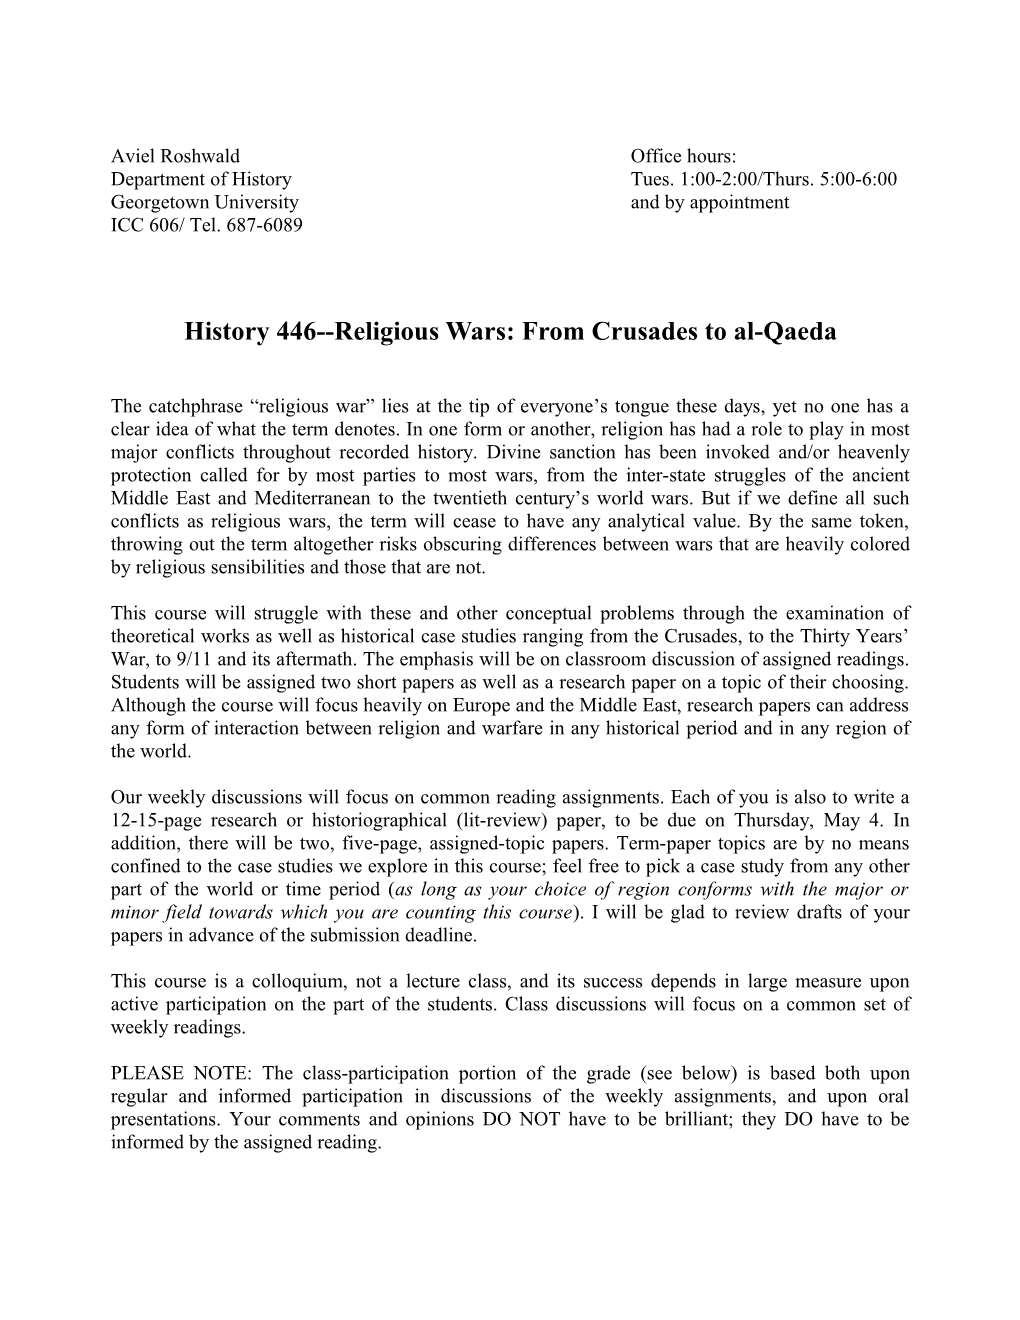 History 446 Religious Wars: from Crusades to Al-Qaeda